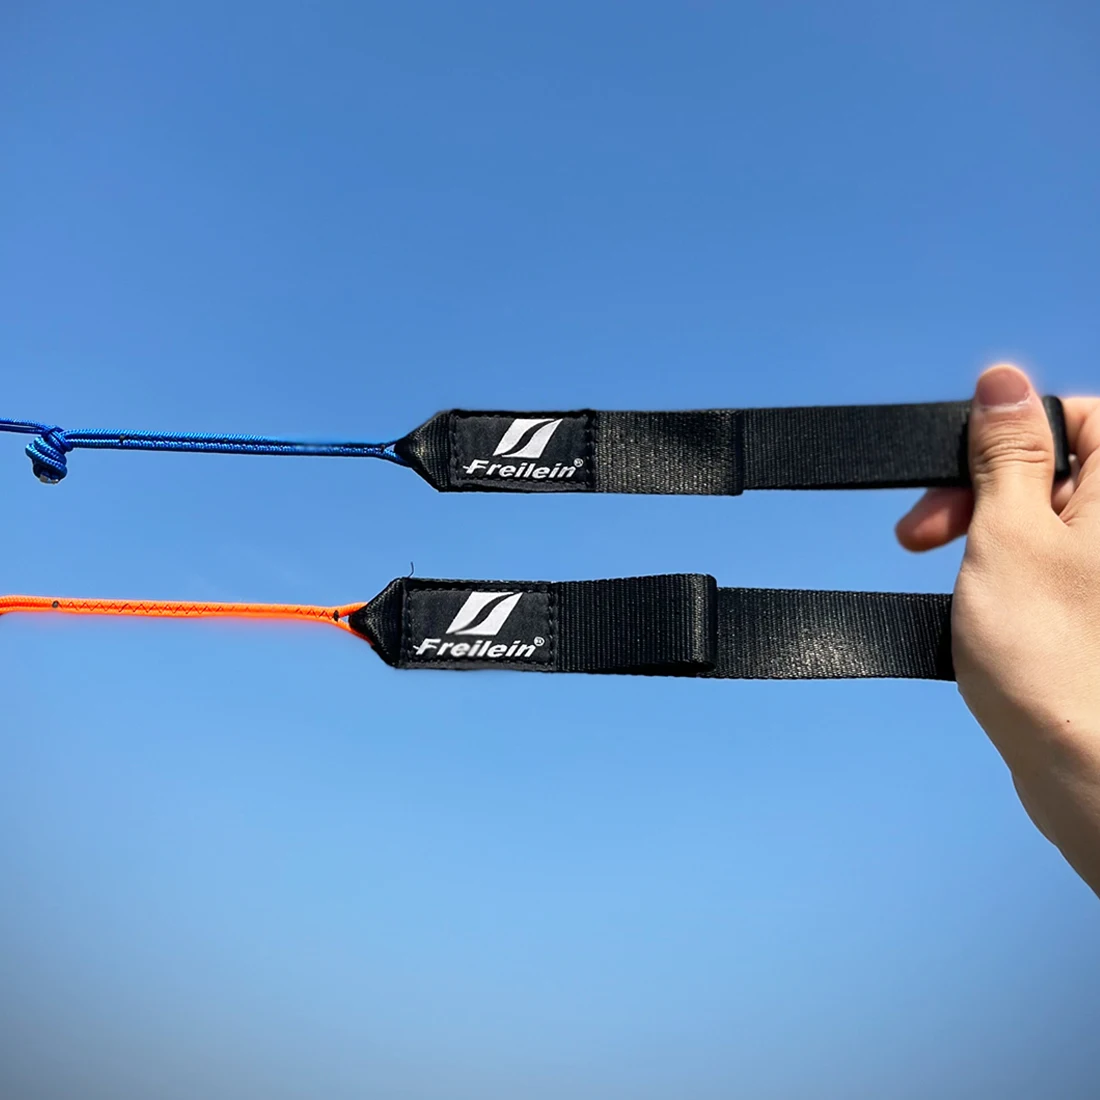 Nylon 2-Line Wrist Straps with Kite Dyneema Line Set for Kite Flying Accessories 